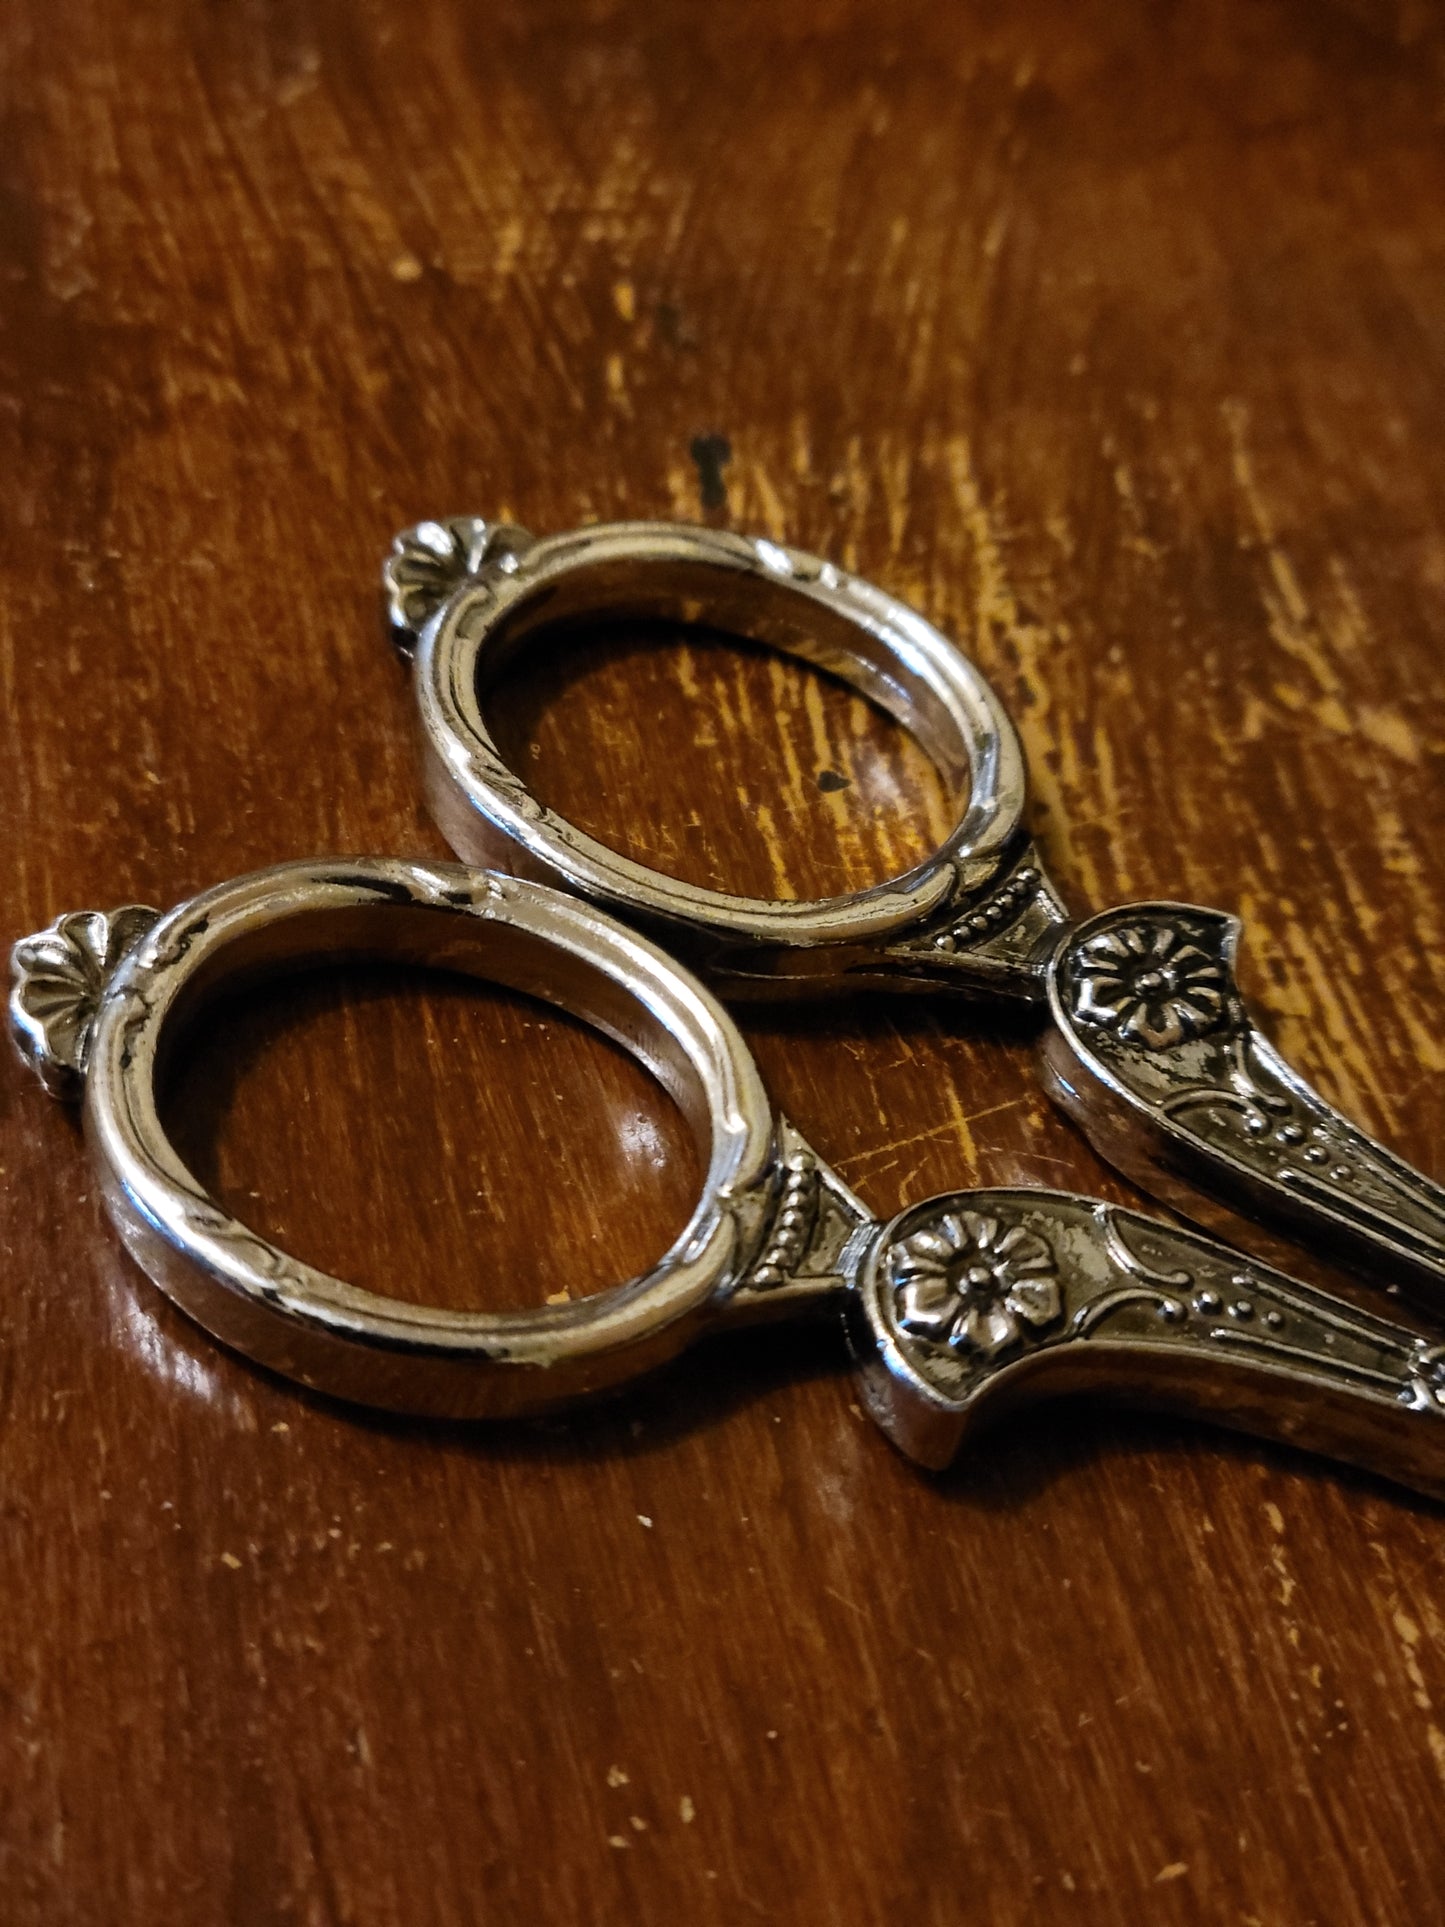 Vintage-Inspired Scissors